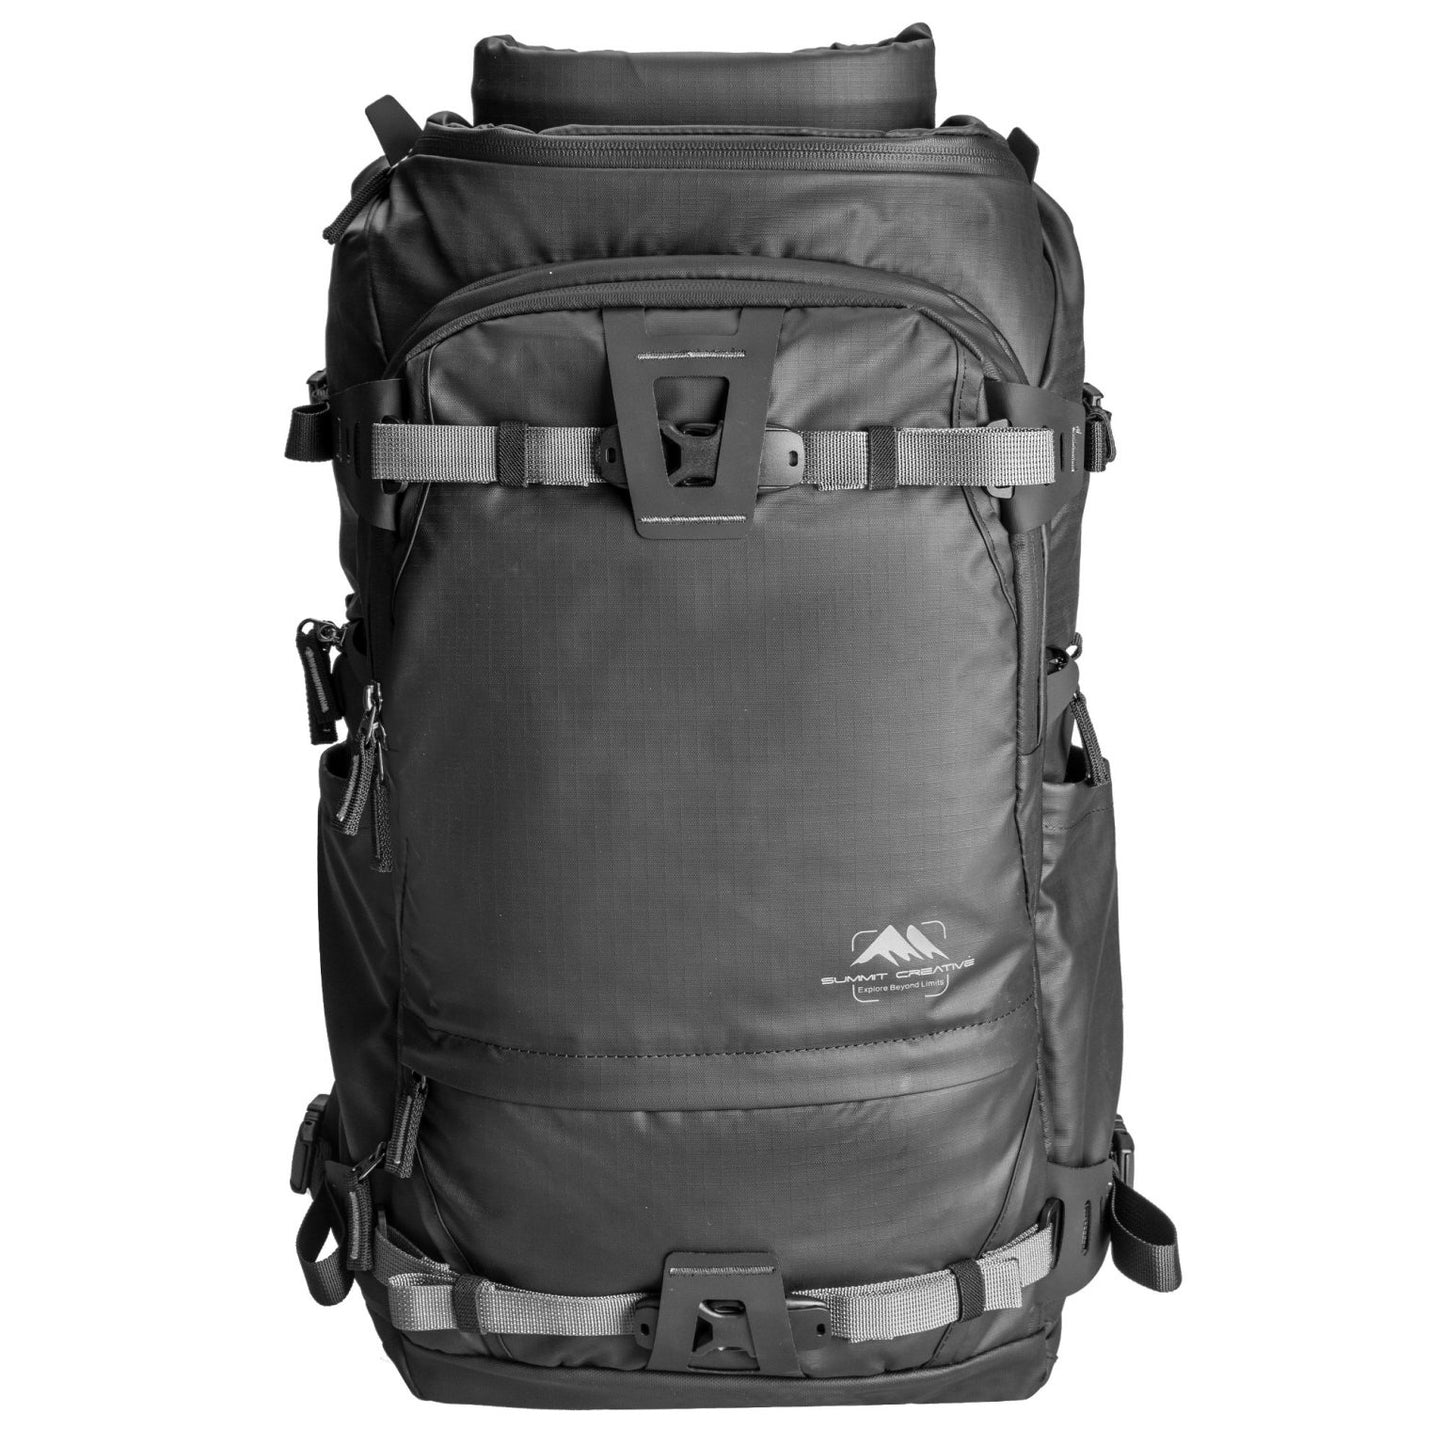 Summit Creative Medium Rolltop Camera Backpack Tenzing 30L